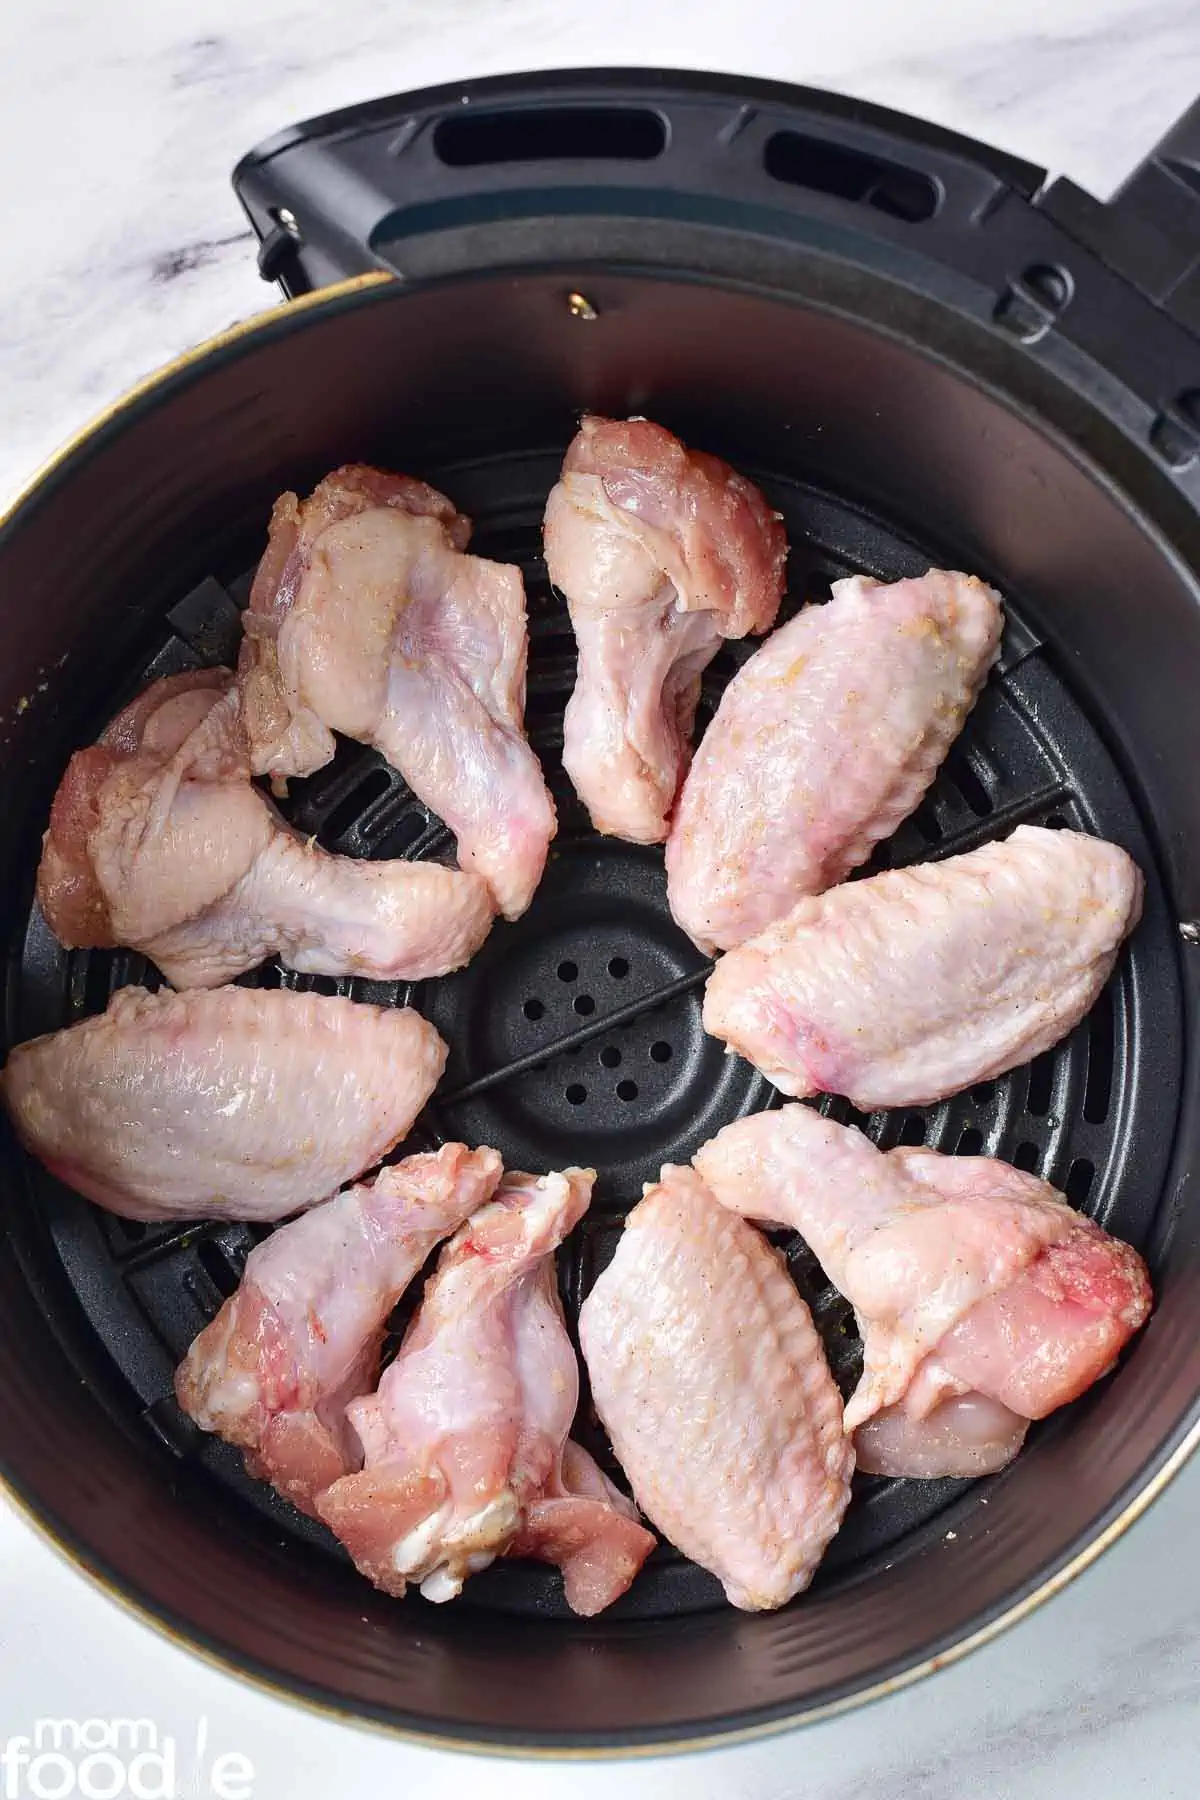 raw chicken wings in air fryer basket.